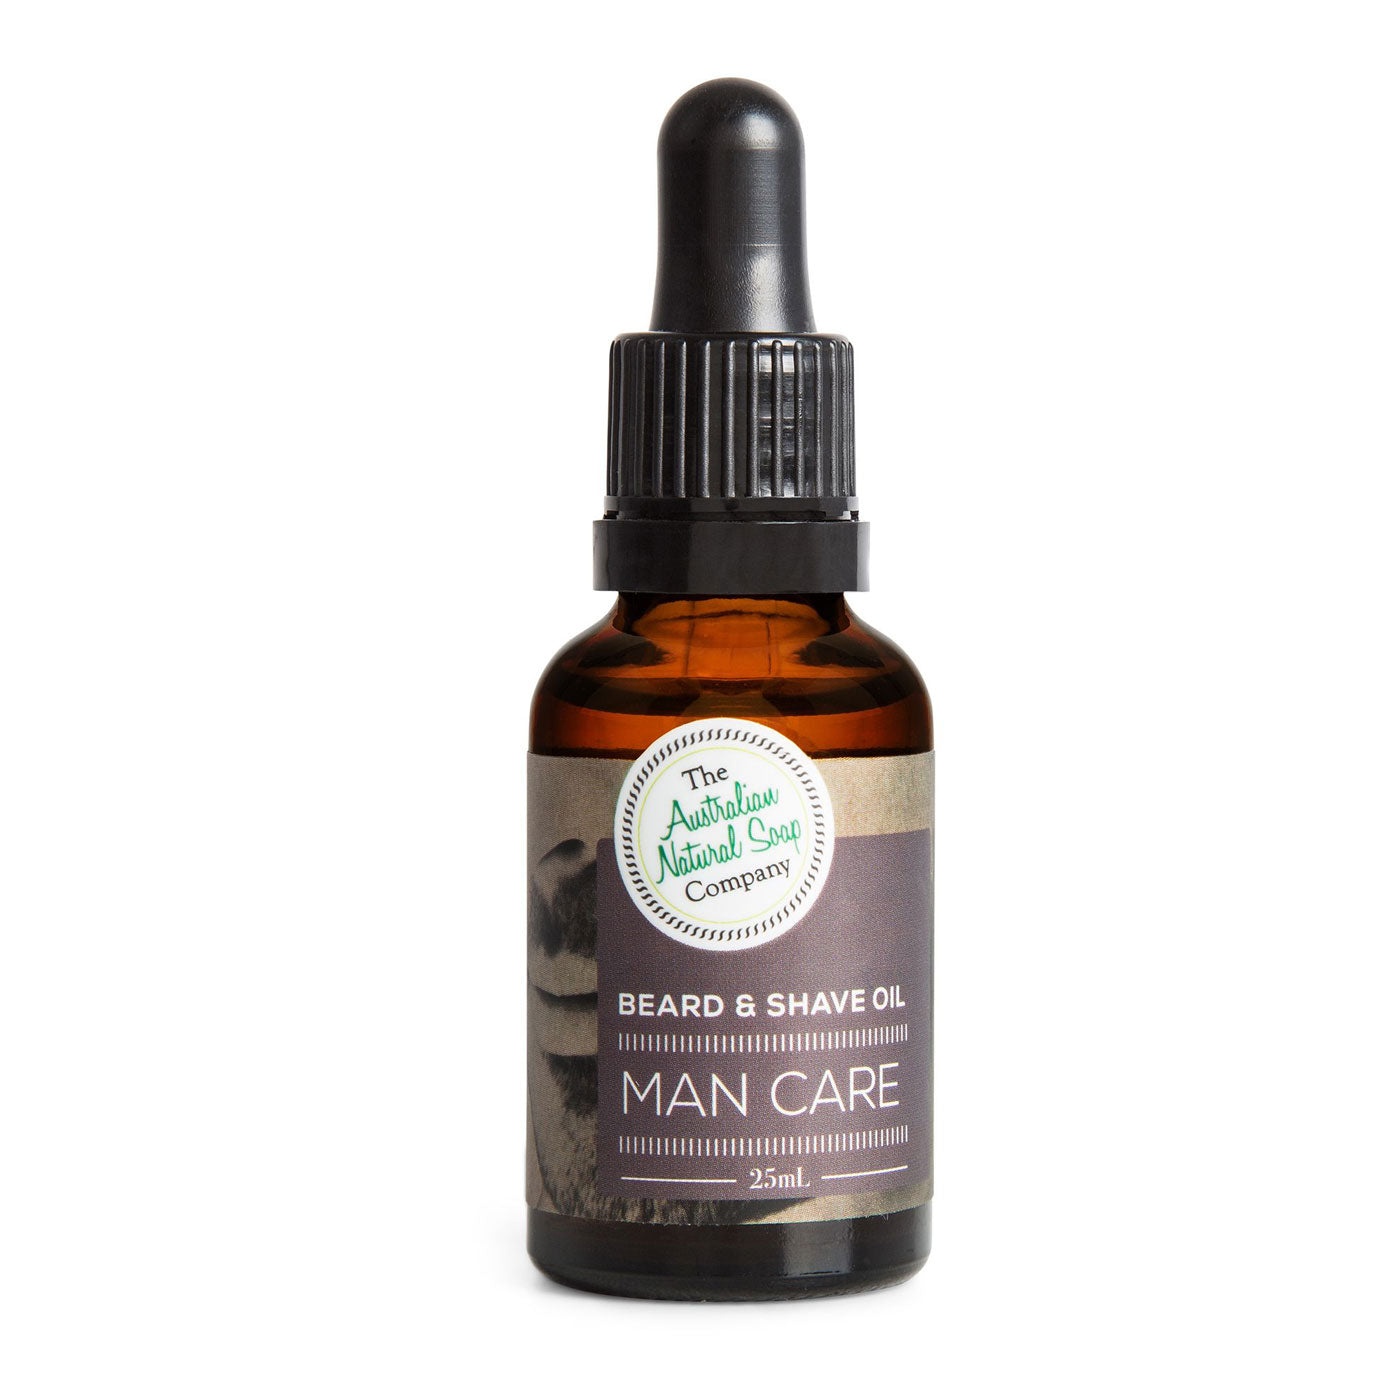 The Australian Natural Soap Company Beard & Shave Oil. Vegan and cruelty-free man care.